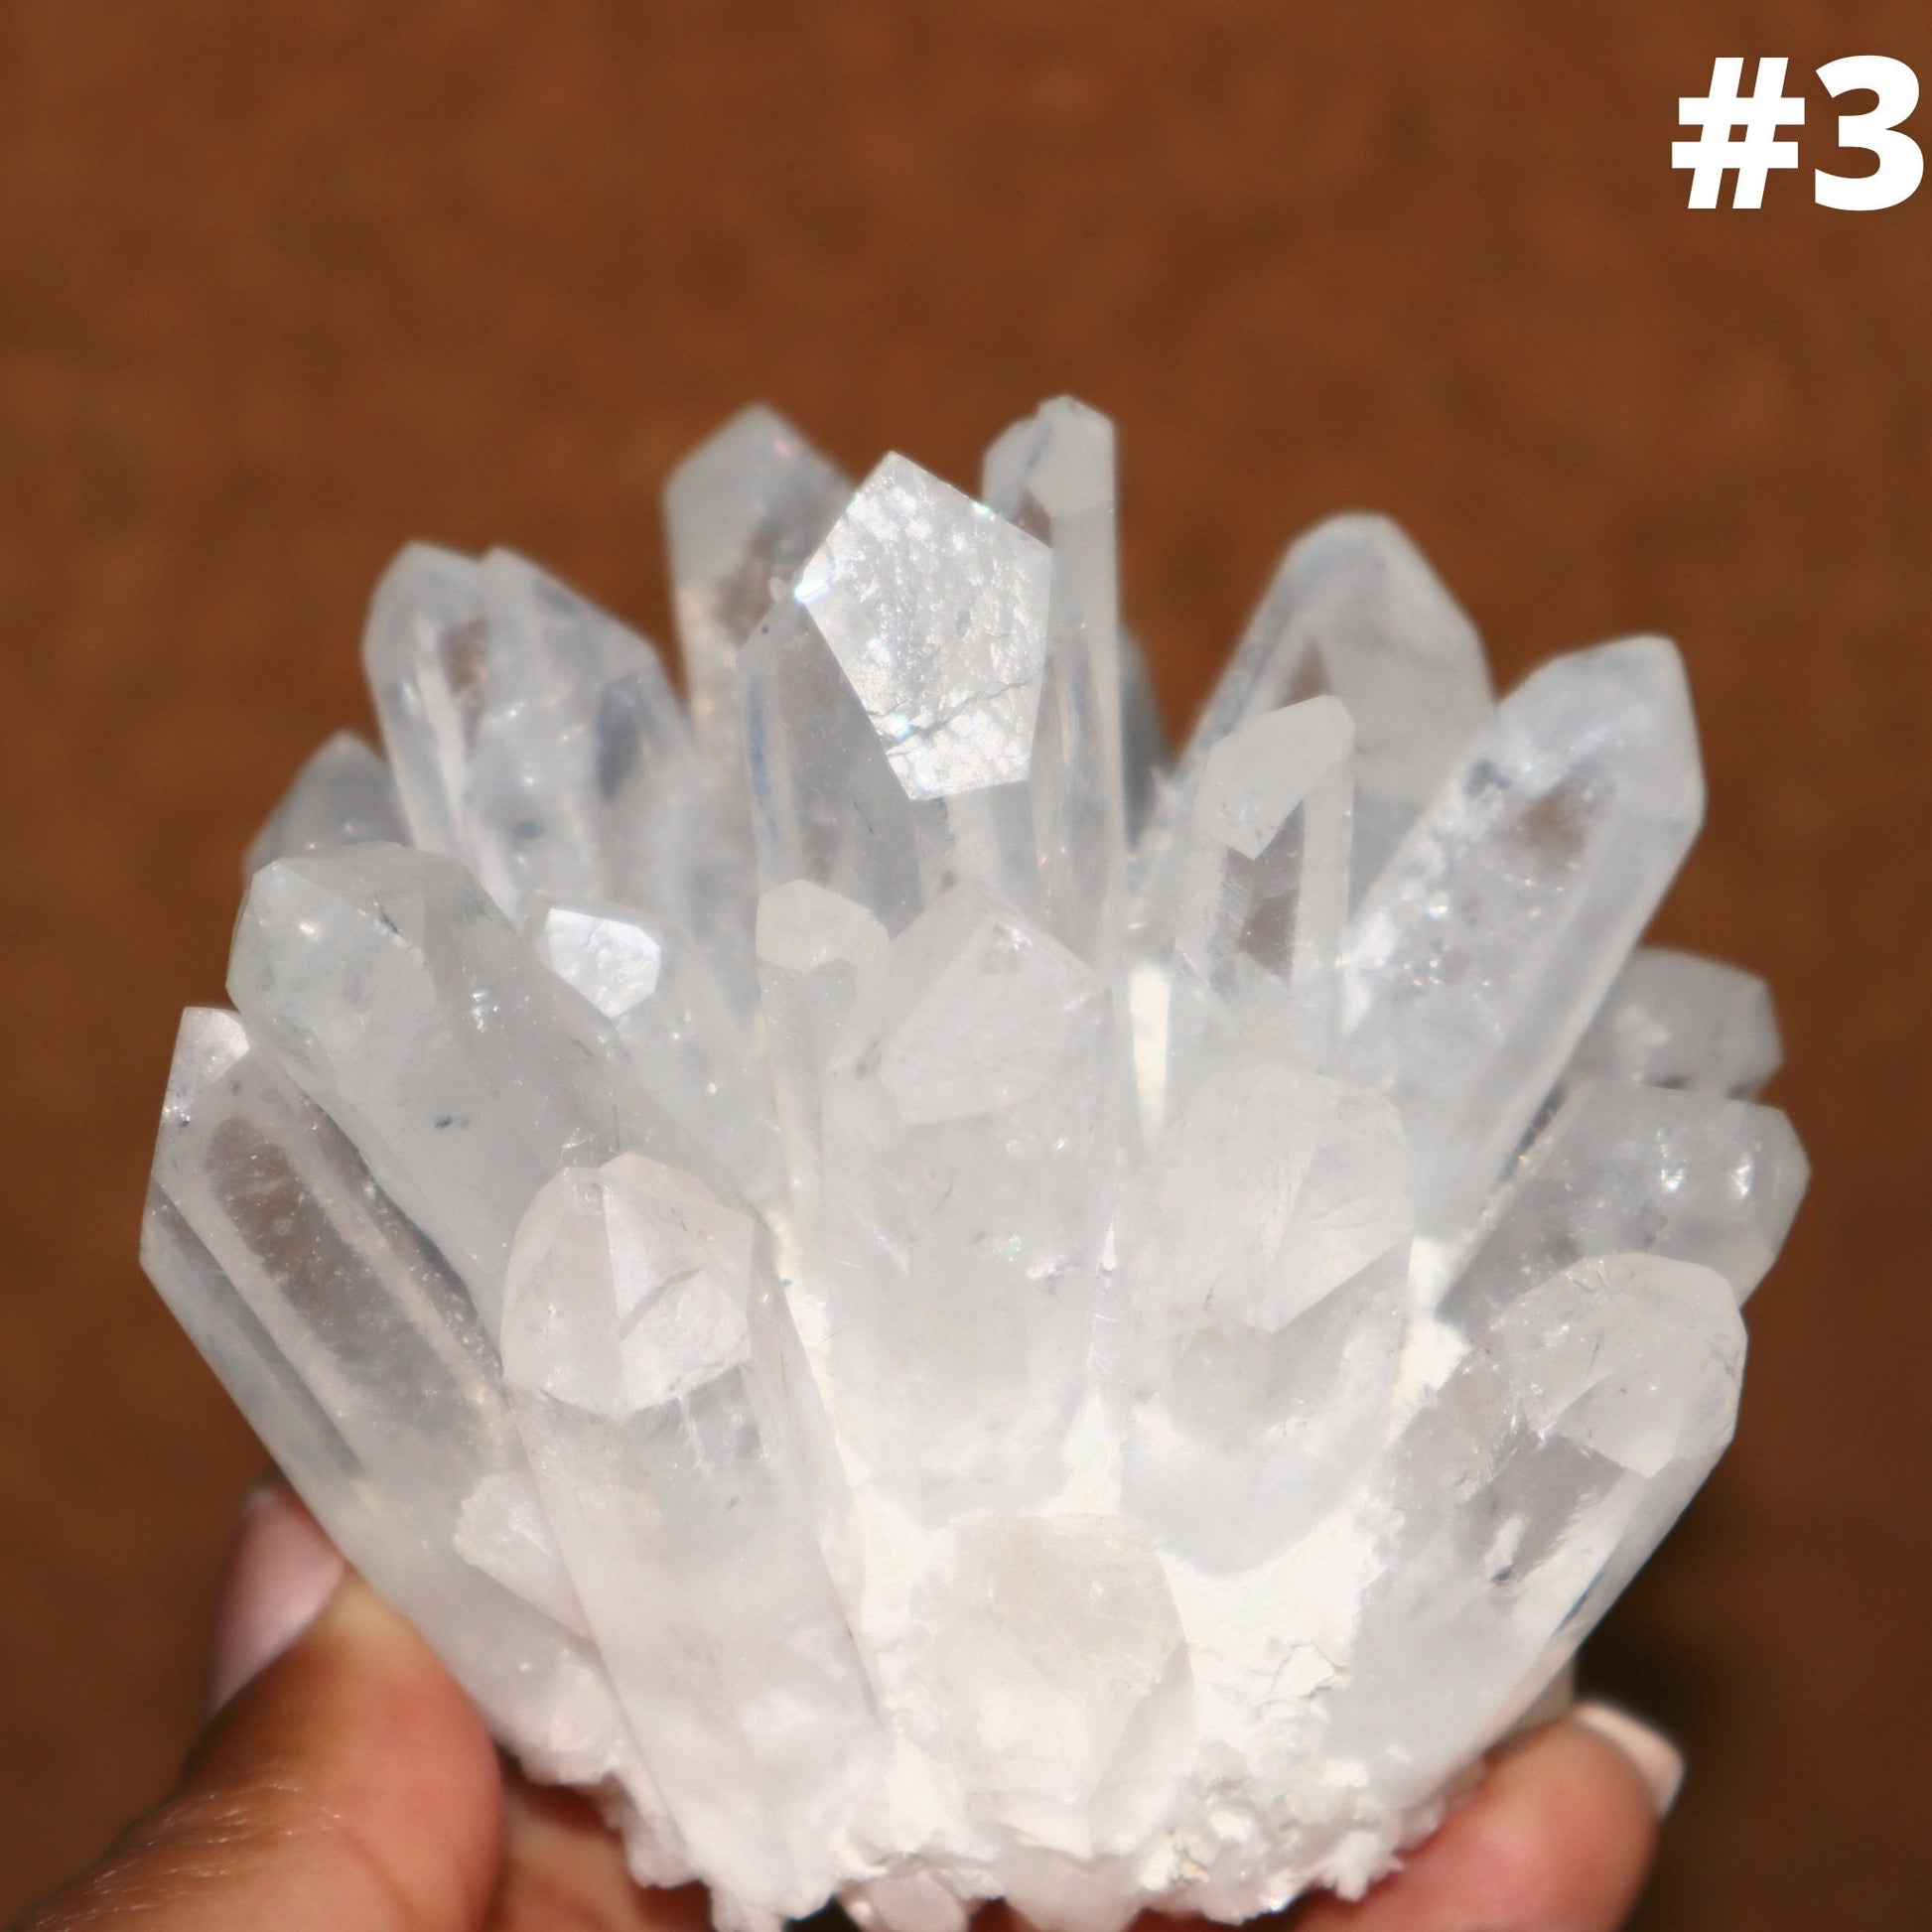 Clear Quartz Cluster Points, Large Raw Clear Quartz Crystal Cluster, Quartz Crystal Cluster Specimen, Natural Quartz, High Quality